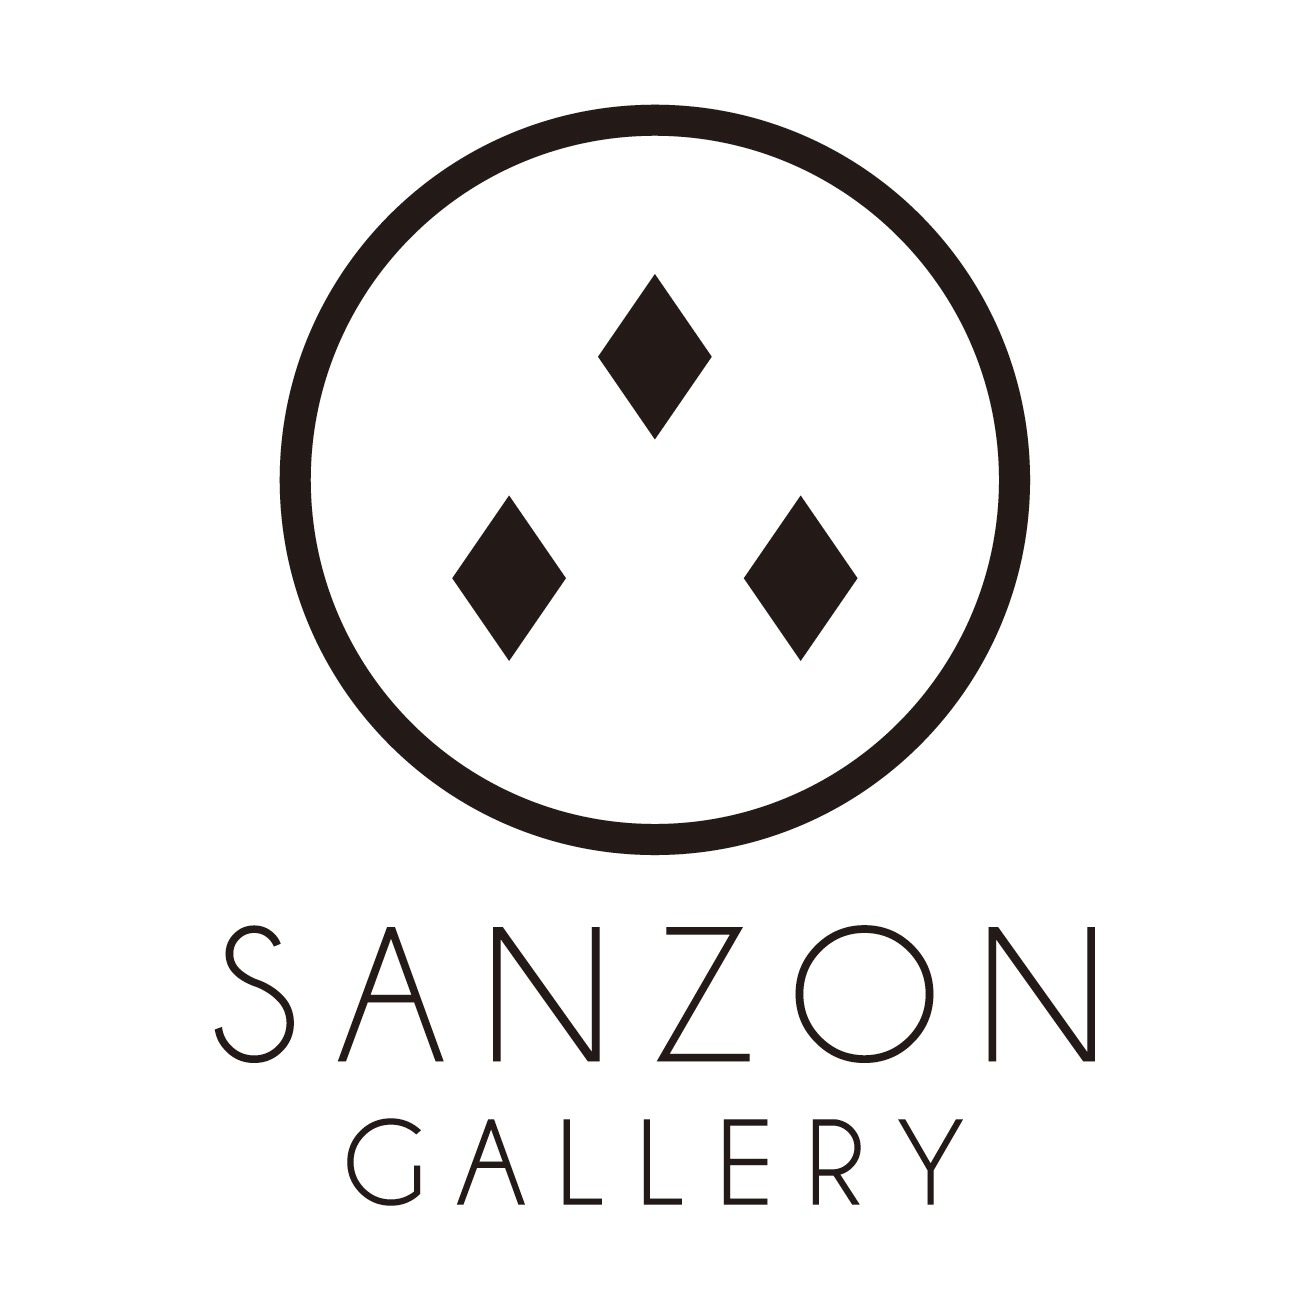 SANZON GALLERY